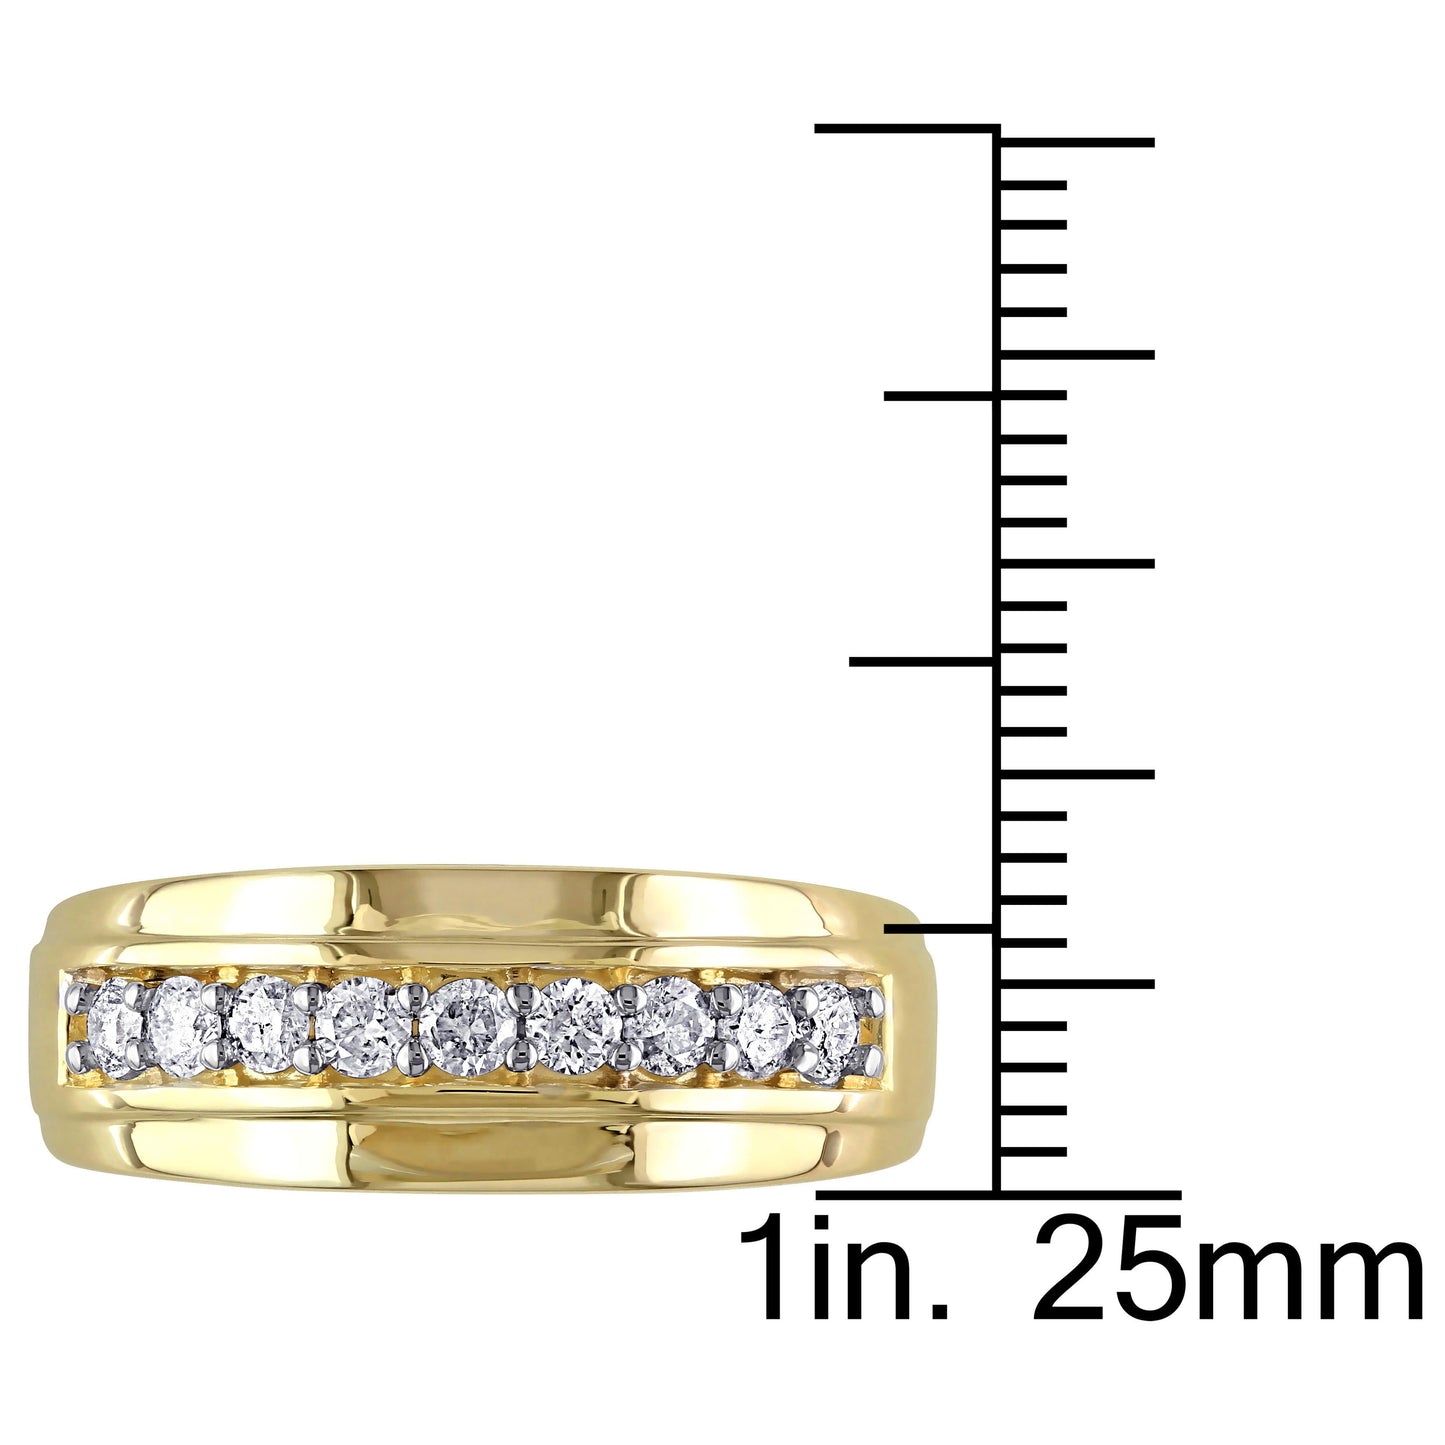 1/2ct Diamond Mens Ring in 10k Yellow Gold